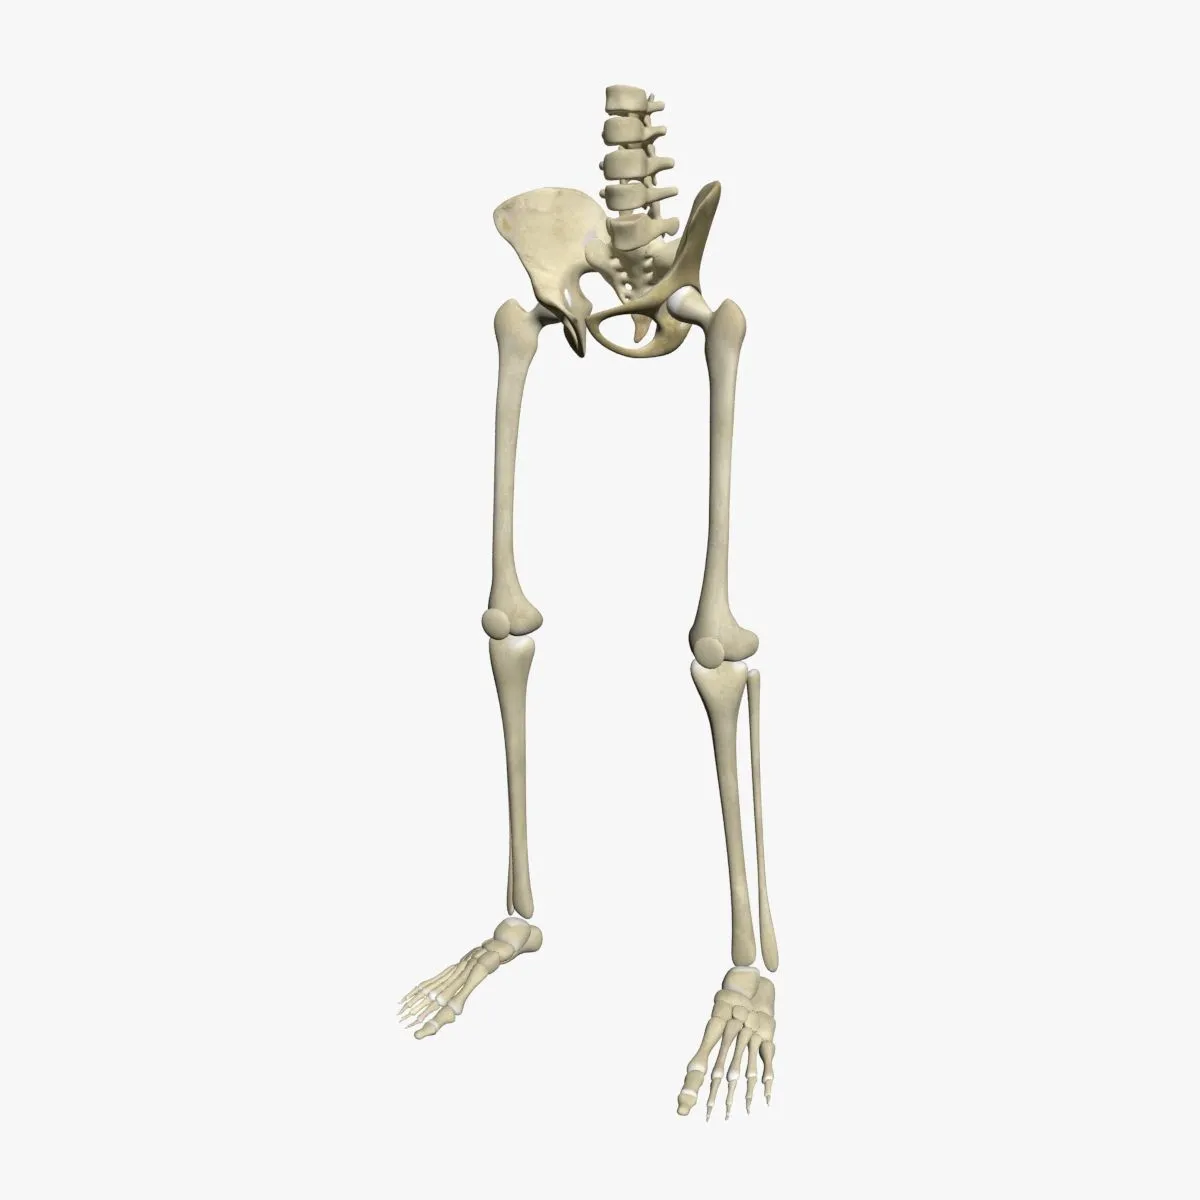 1 скелет голени. Человеческий скелет. Скелет ноги. Скелет ноги человека. Скелет человеческой ноги.